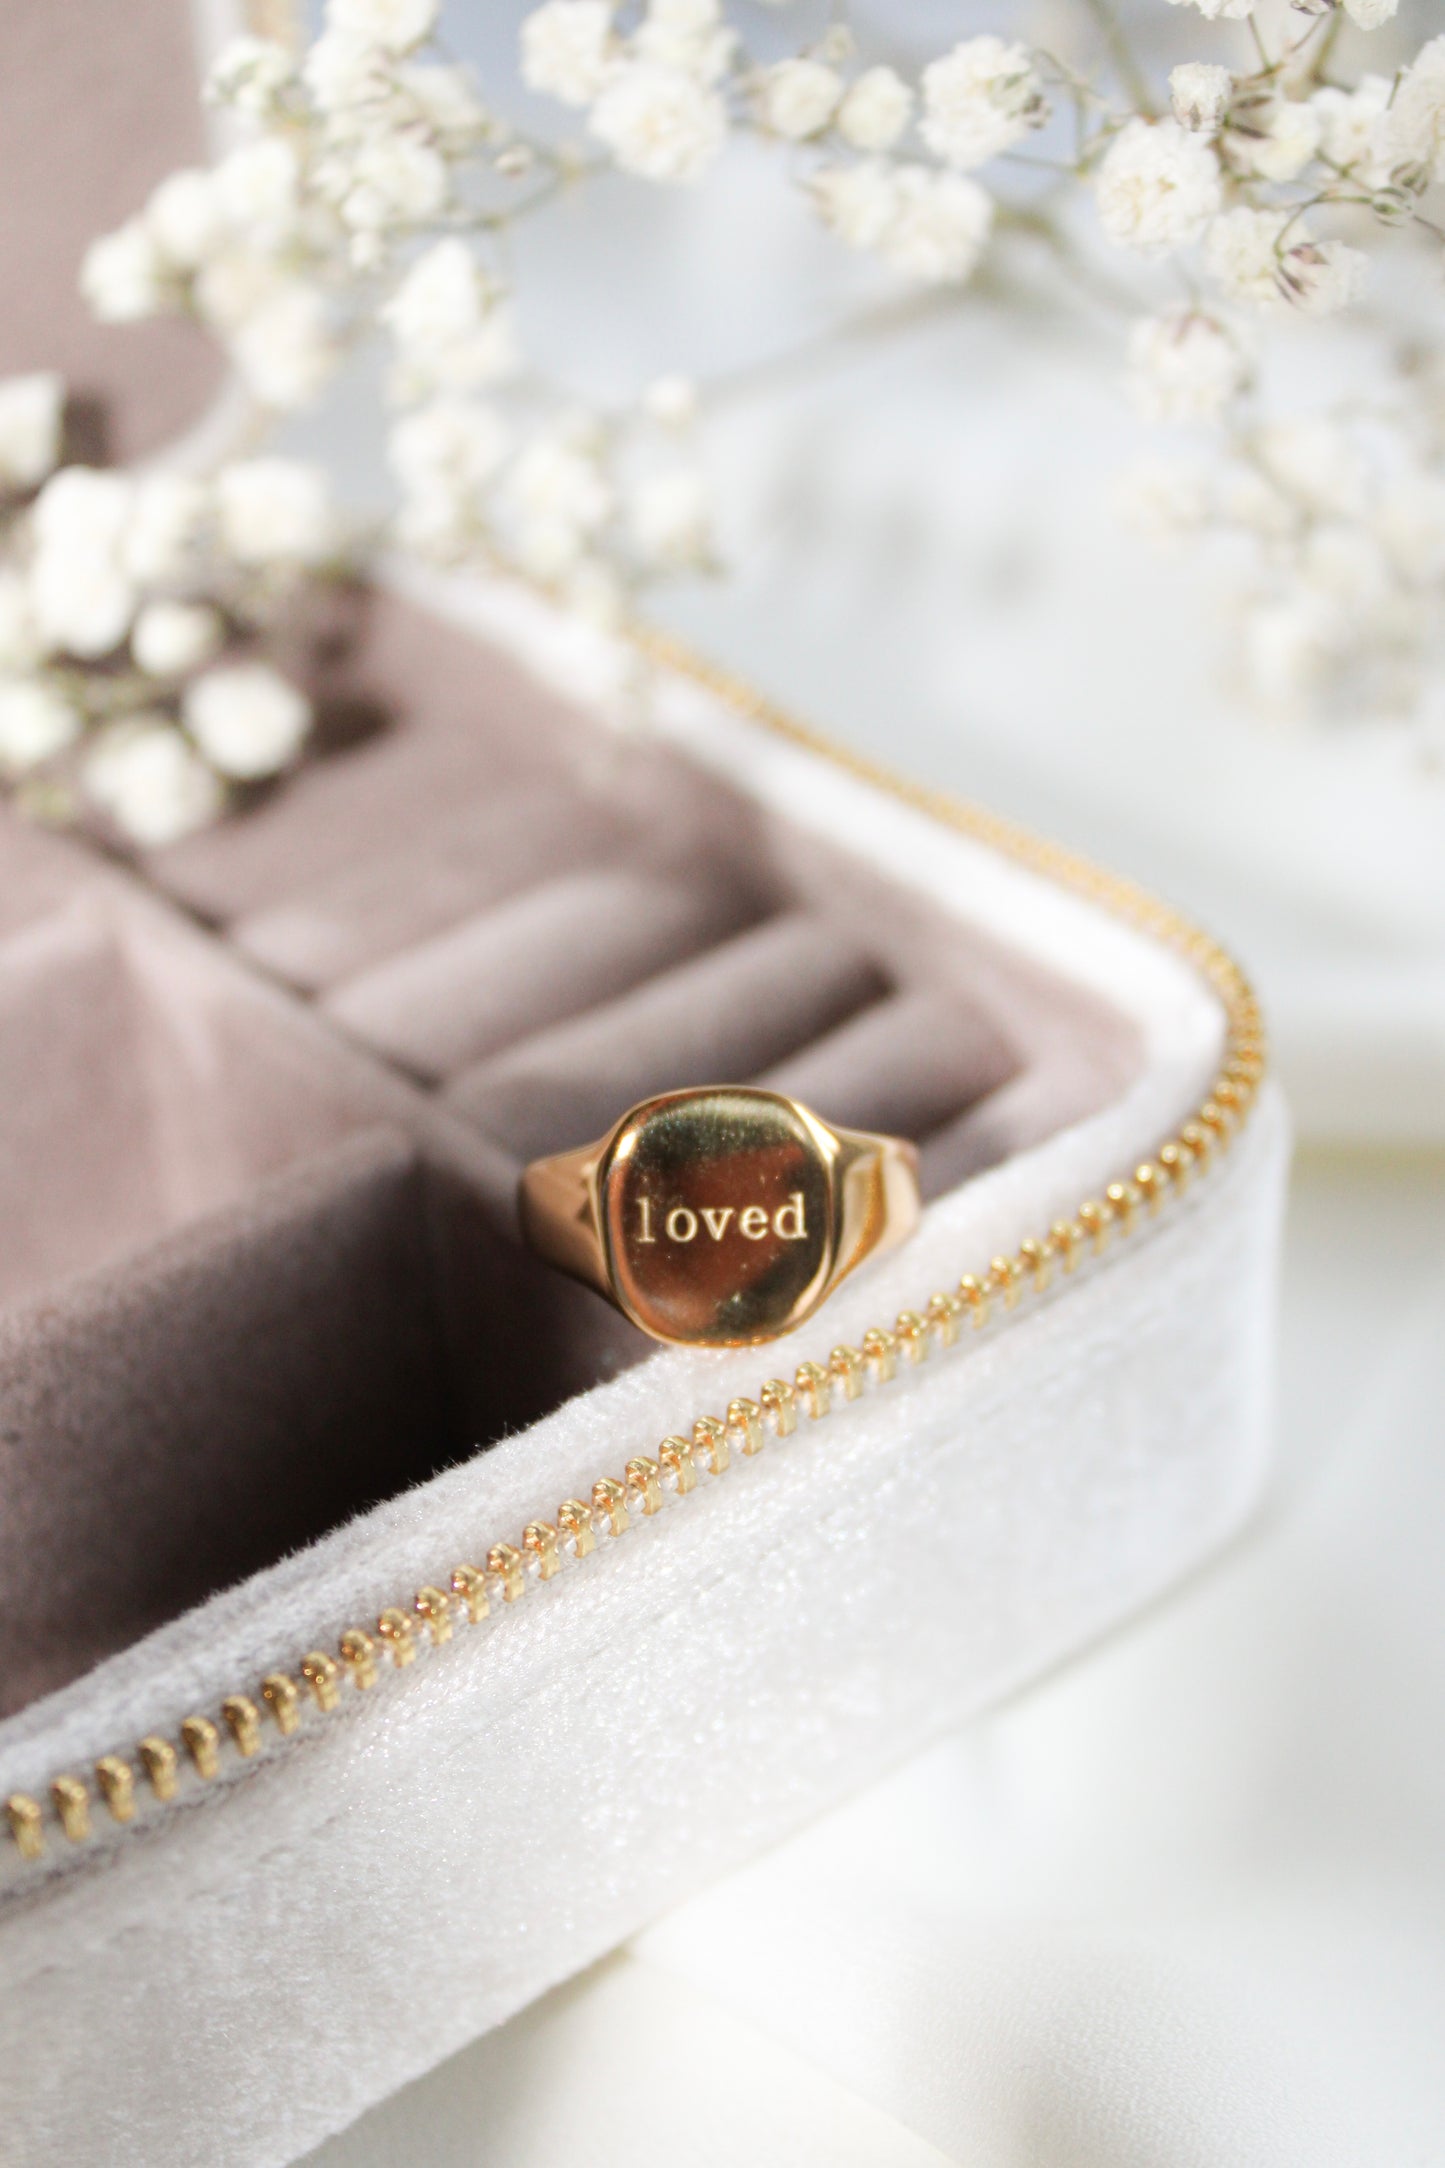 "Loved" Ring